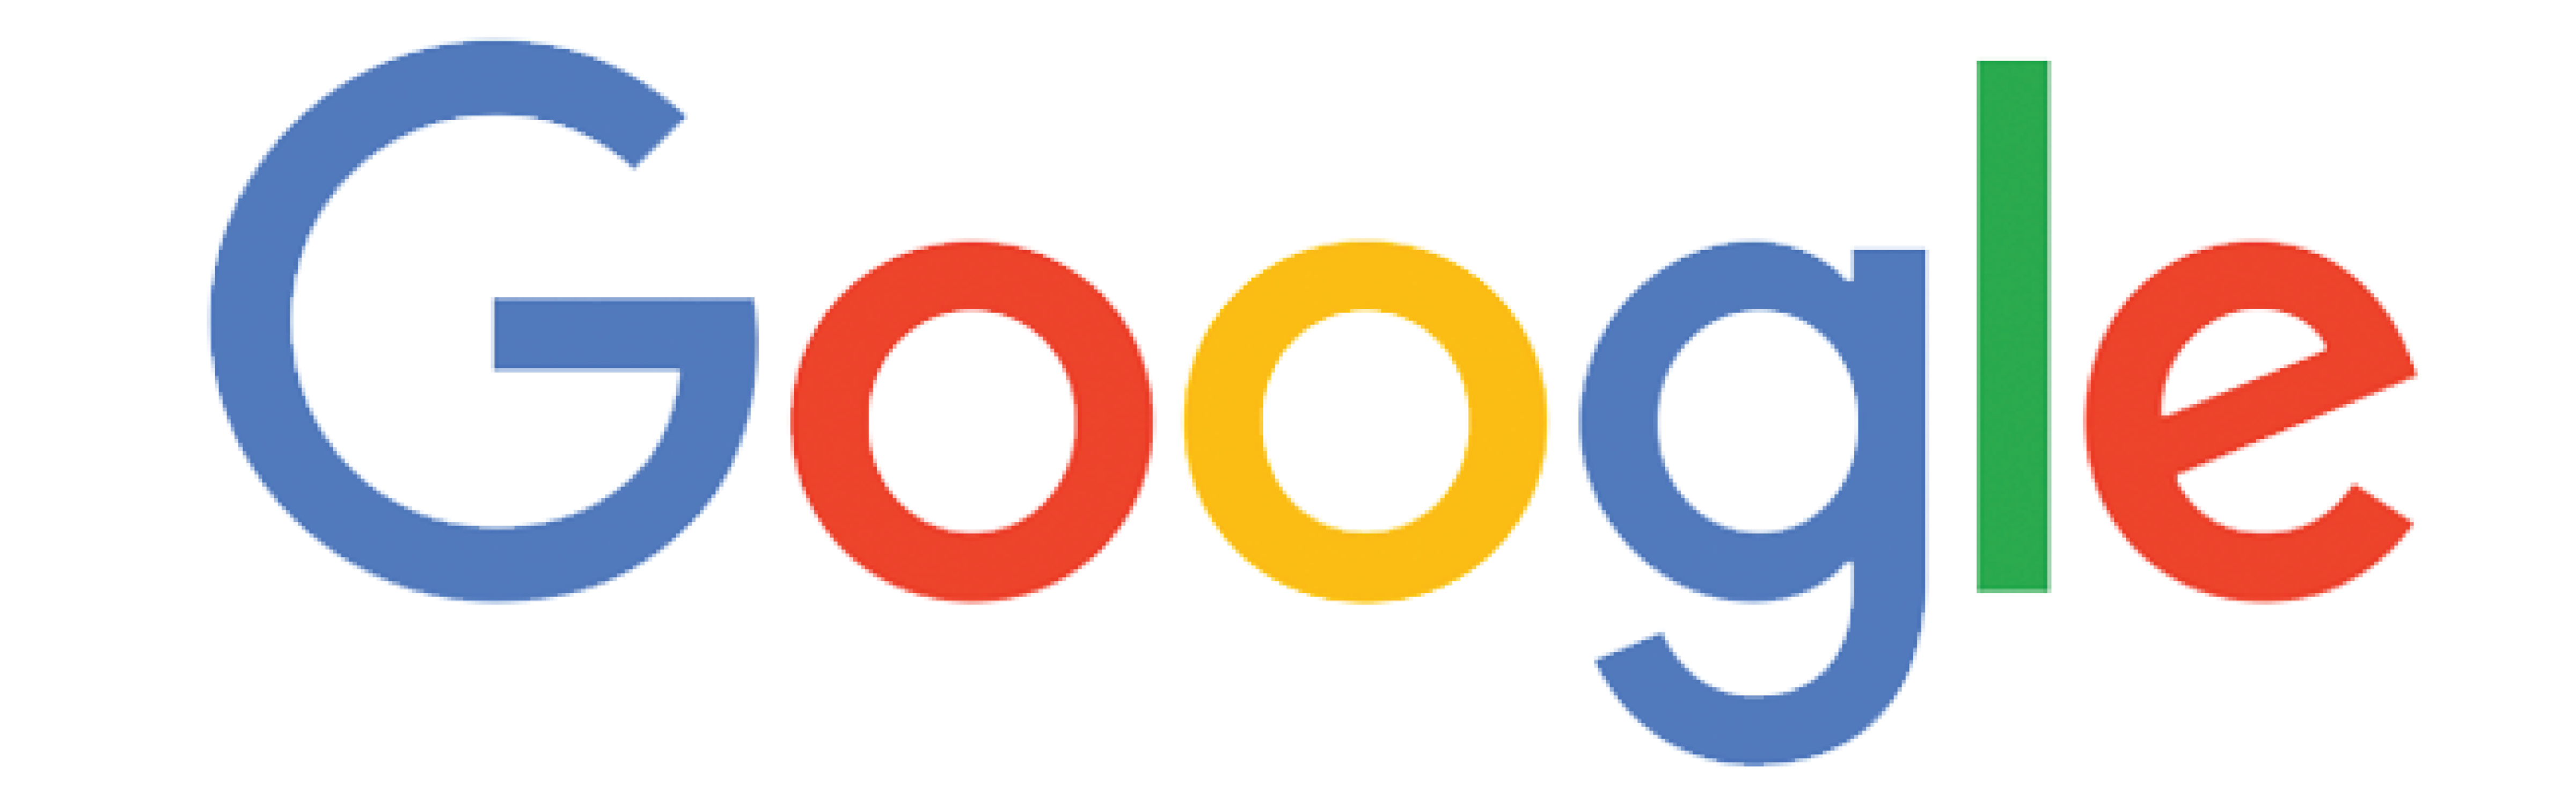 Google, Inc. logo